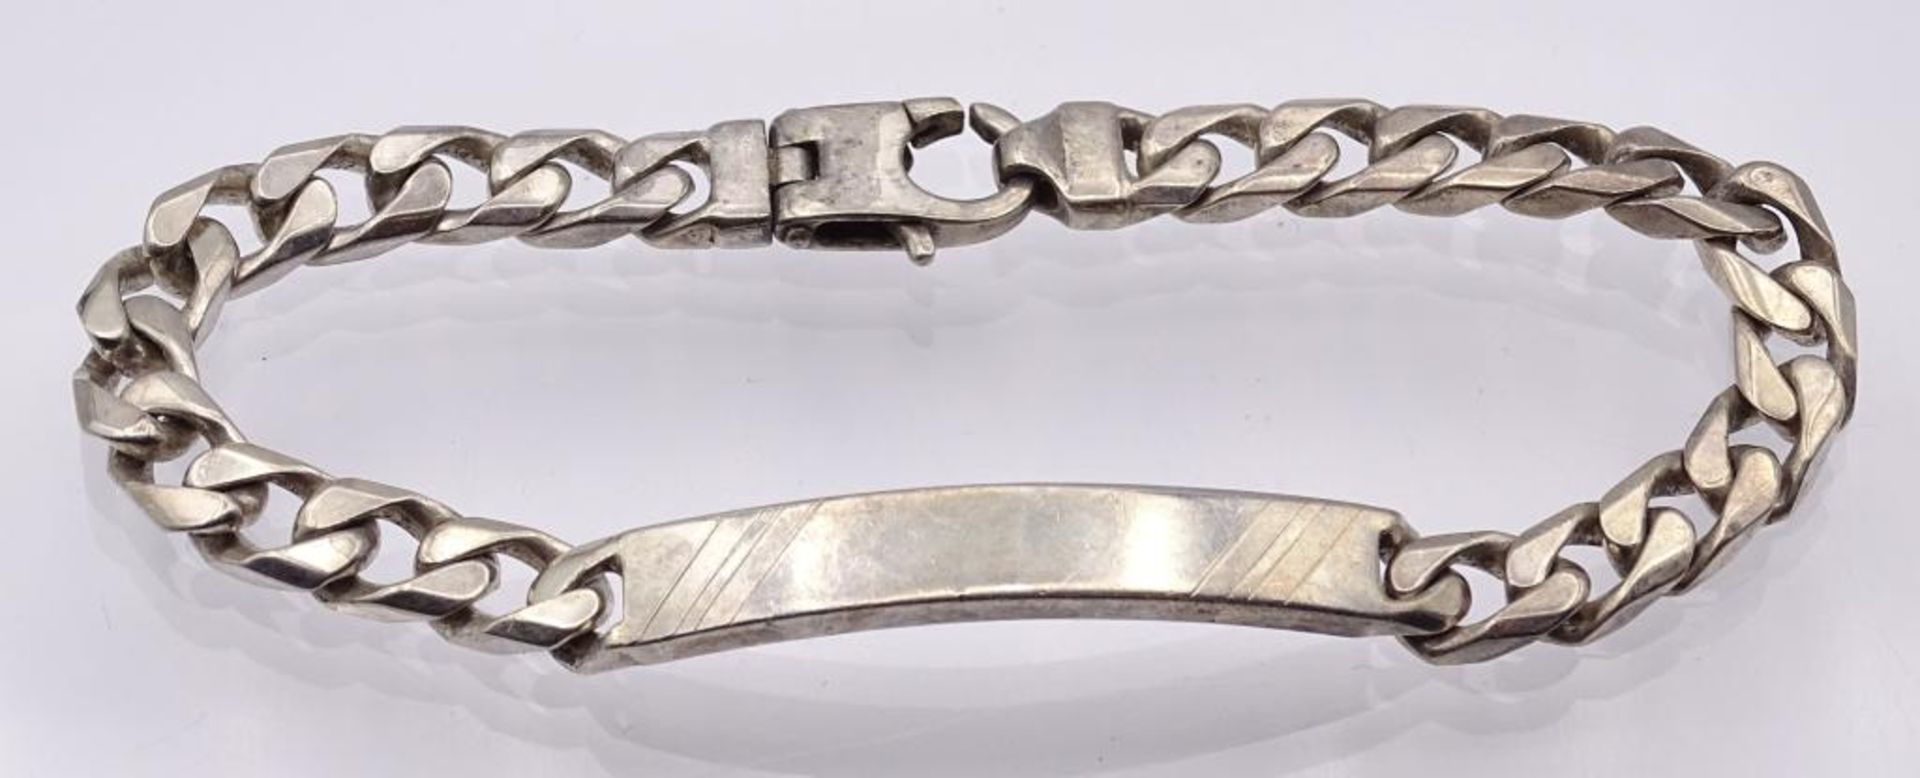 Identitätsband Sterling Silber, Gravurplatte nicht beschriftet,Silber 925/000,L-22cm,b-7mm,30, - Image 3 of 3